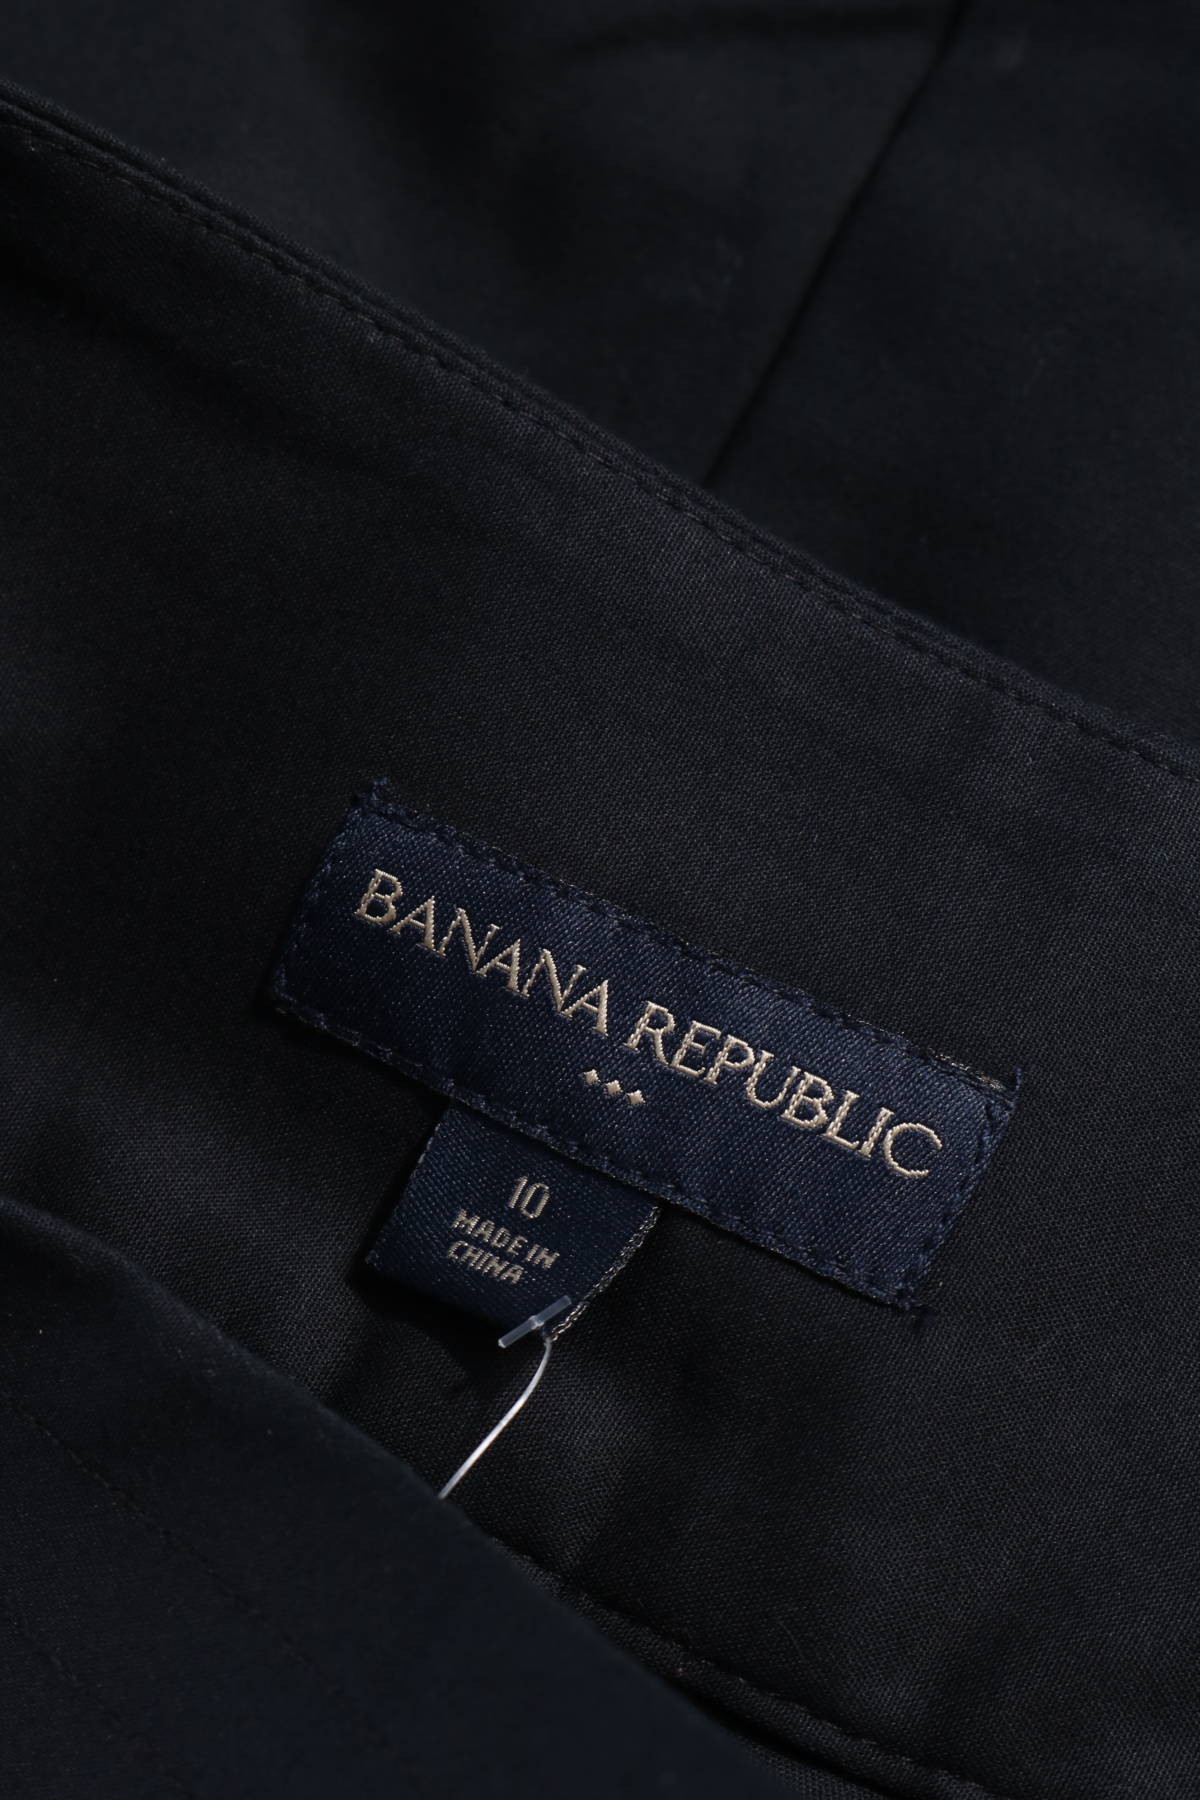 Панталон BANANA REPUBLIC3